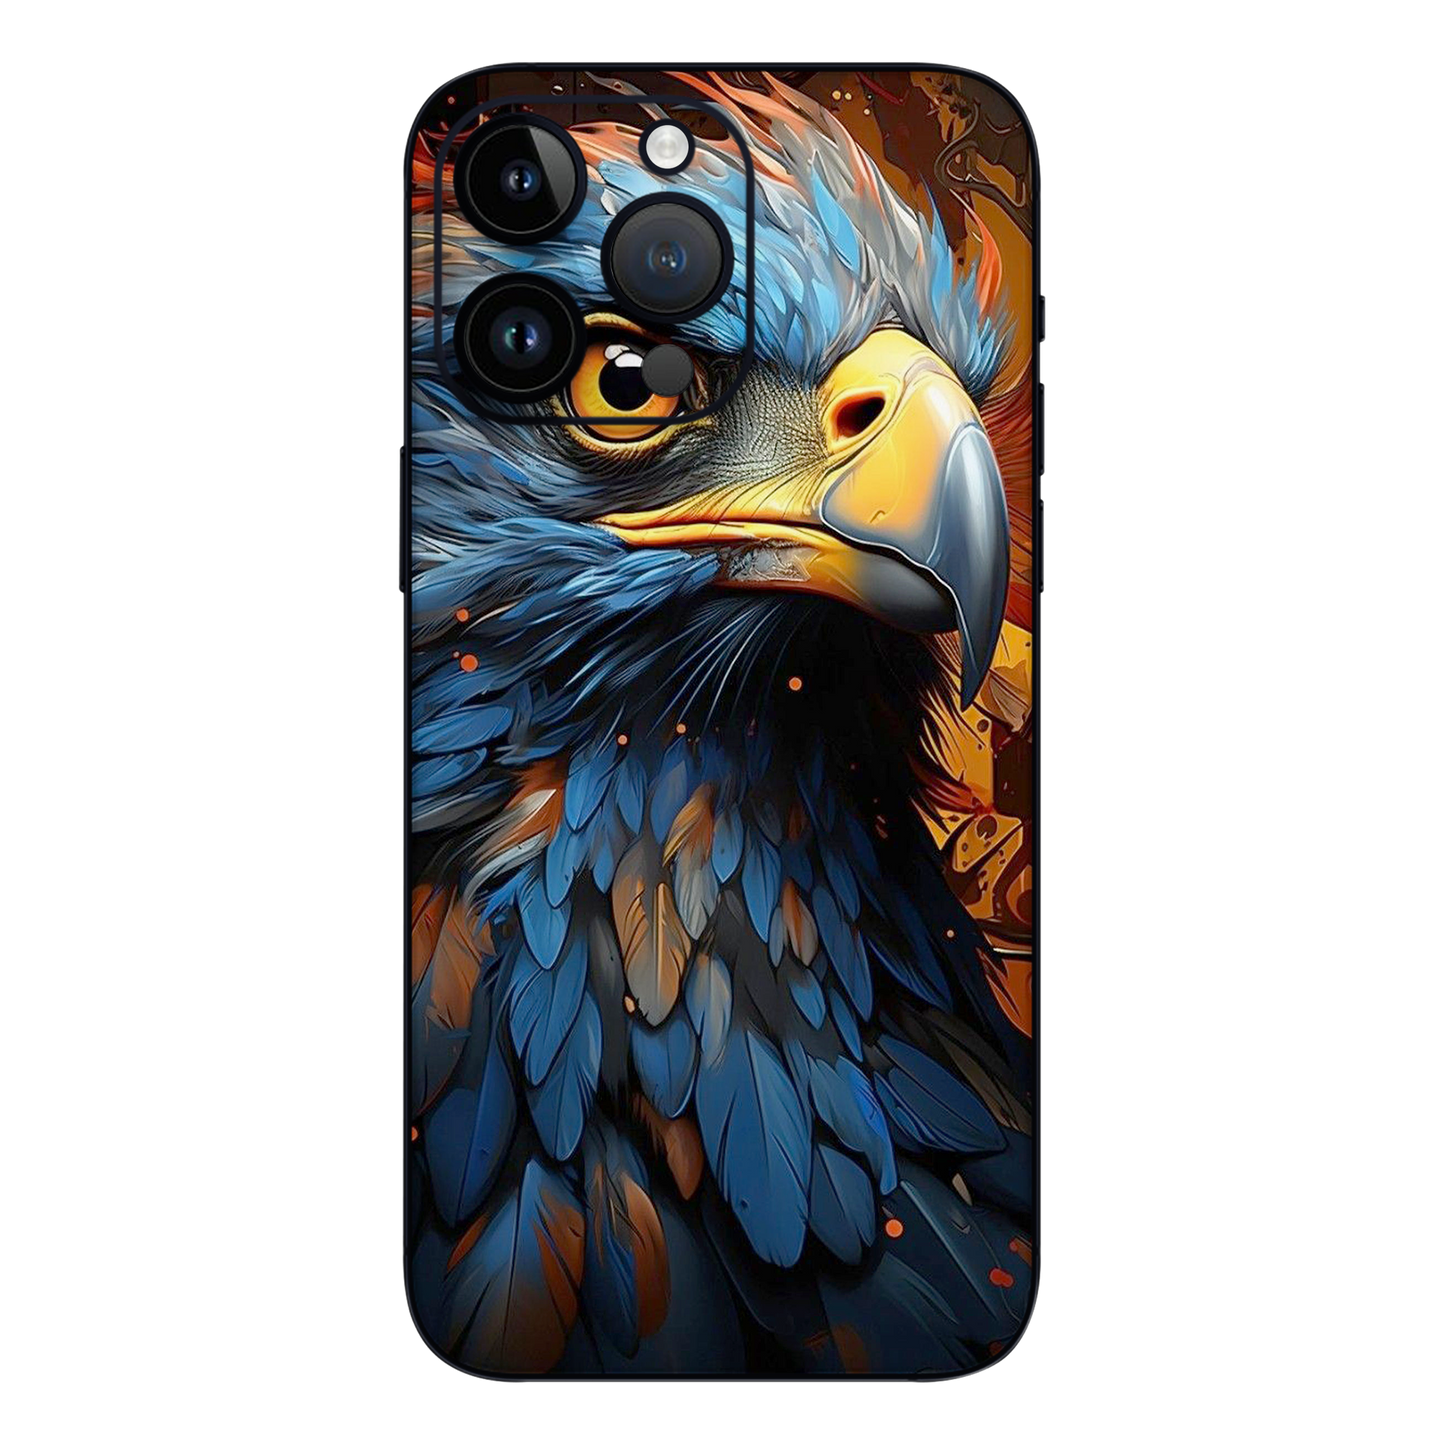 Wrapie Blue Eagle Illustration Mobile Skin